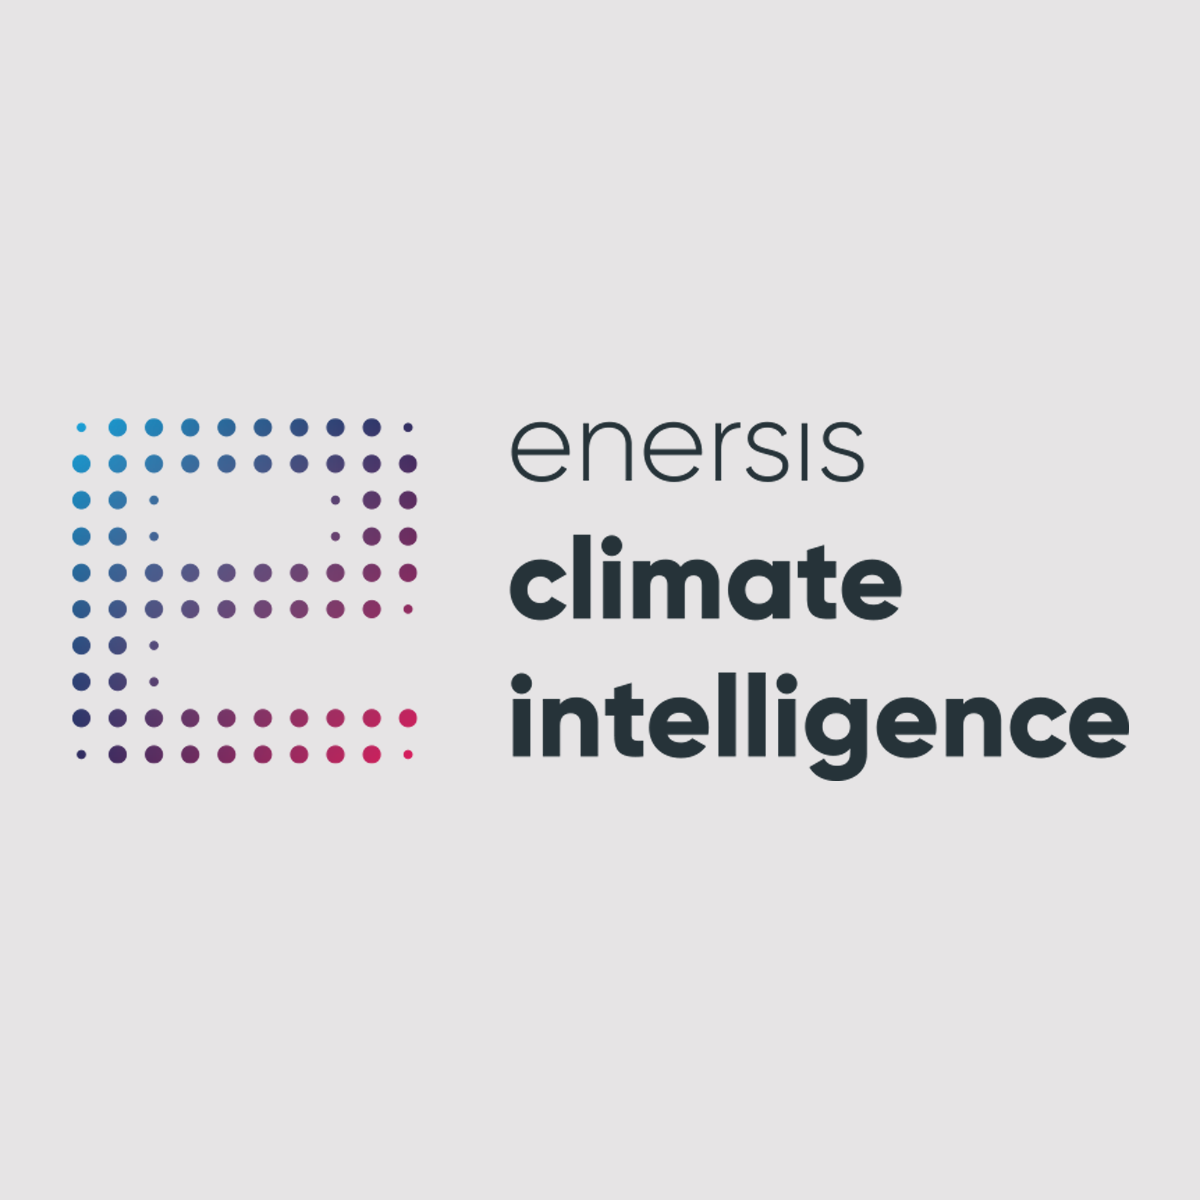 Enersis climate intelligence